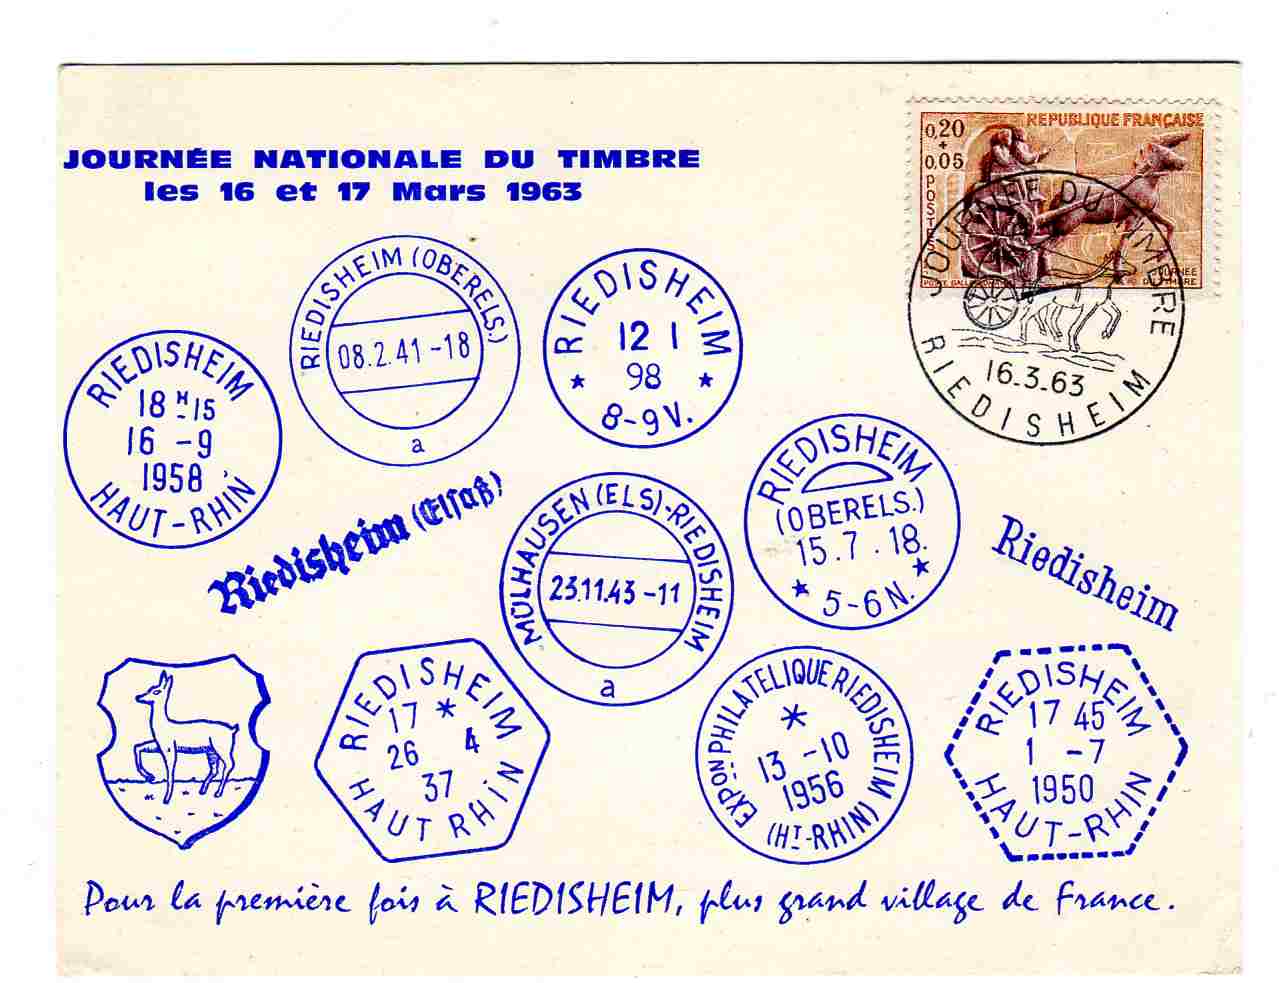 Journee nationale du timbre 16&17/3/1963